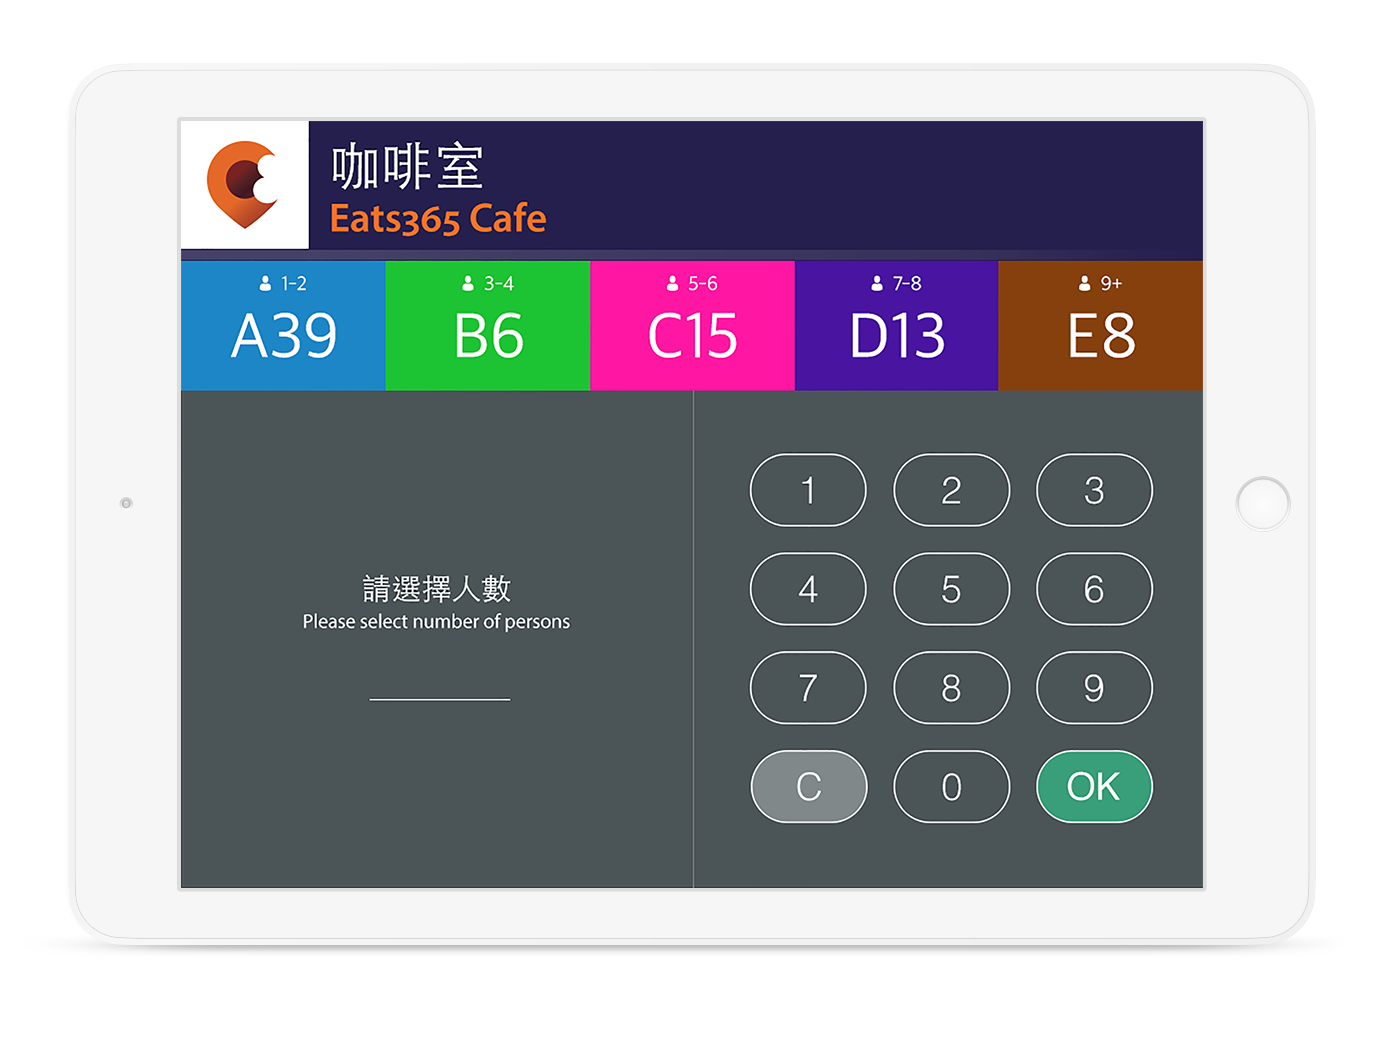 Part of Eats365’s Queue Ticket Kiosk user interface.